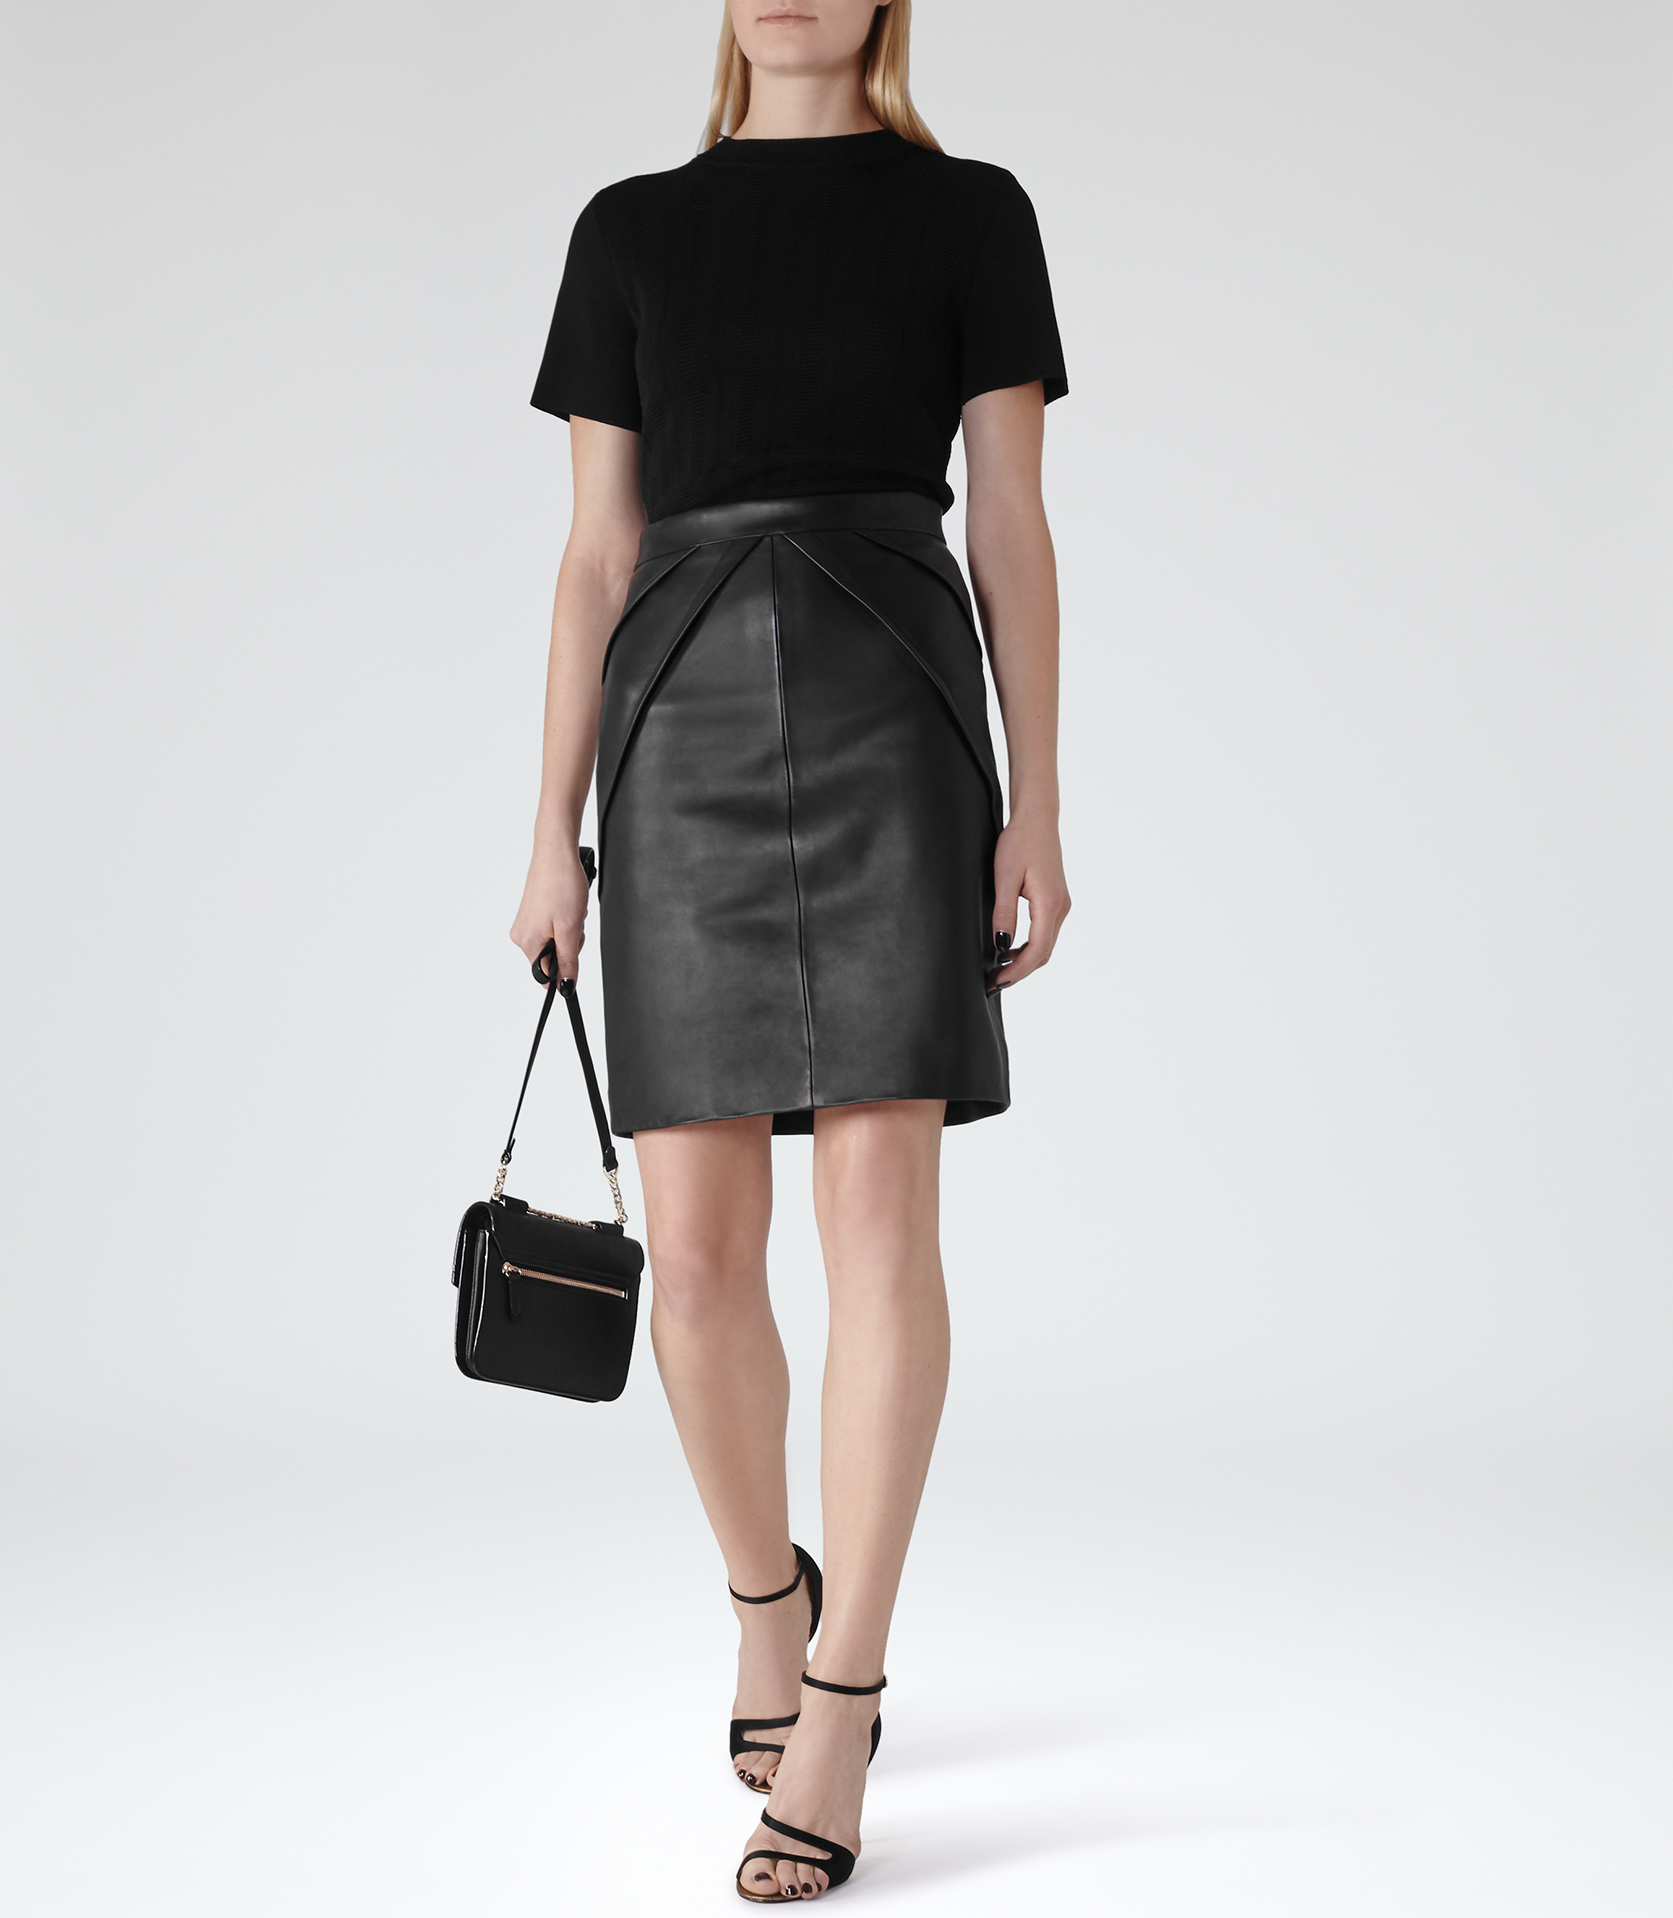 Lyst - Reiss Etianne Leather Pencil Skirt in Black